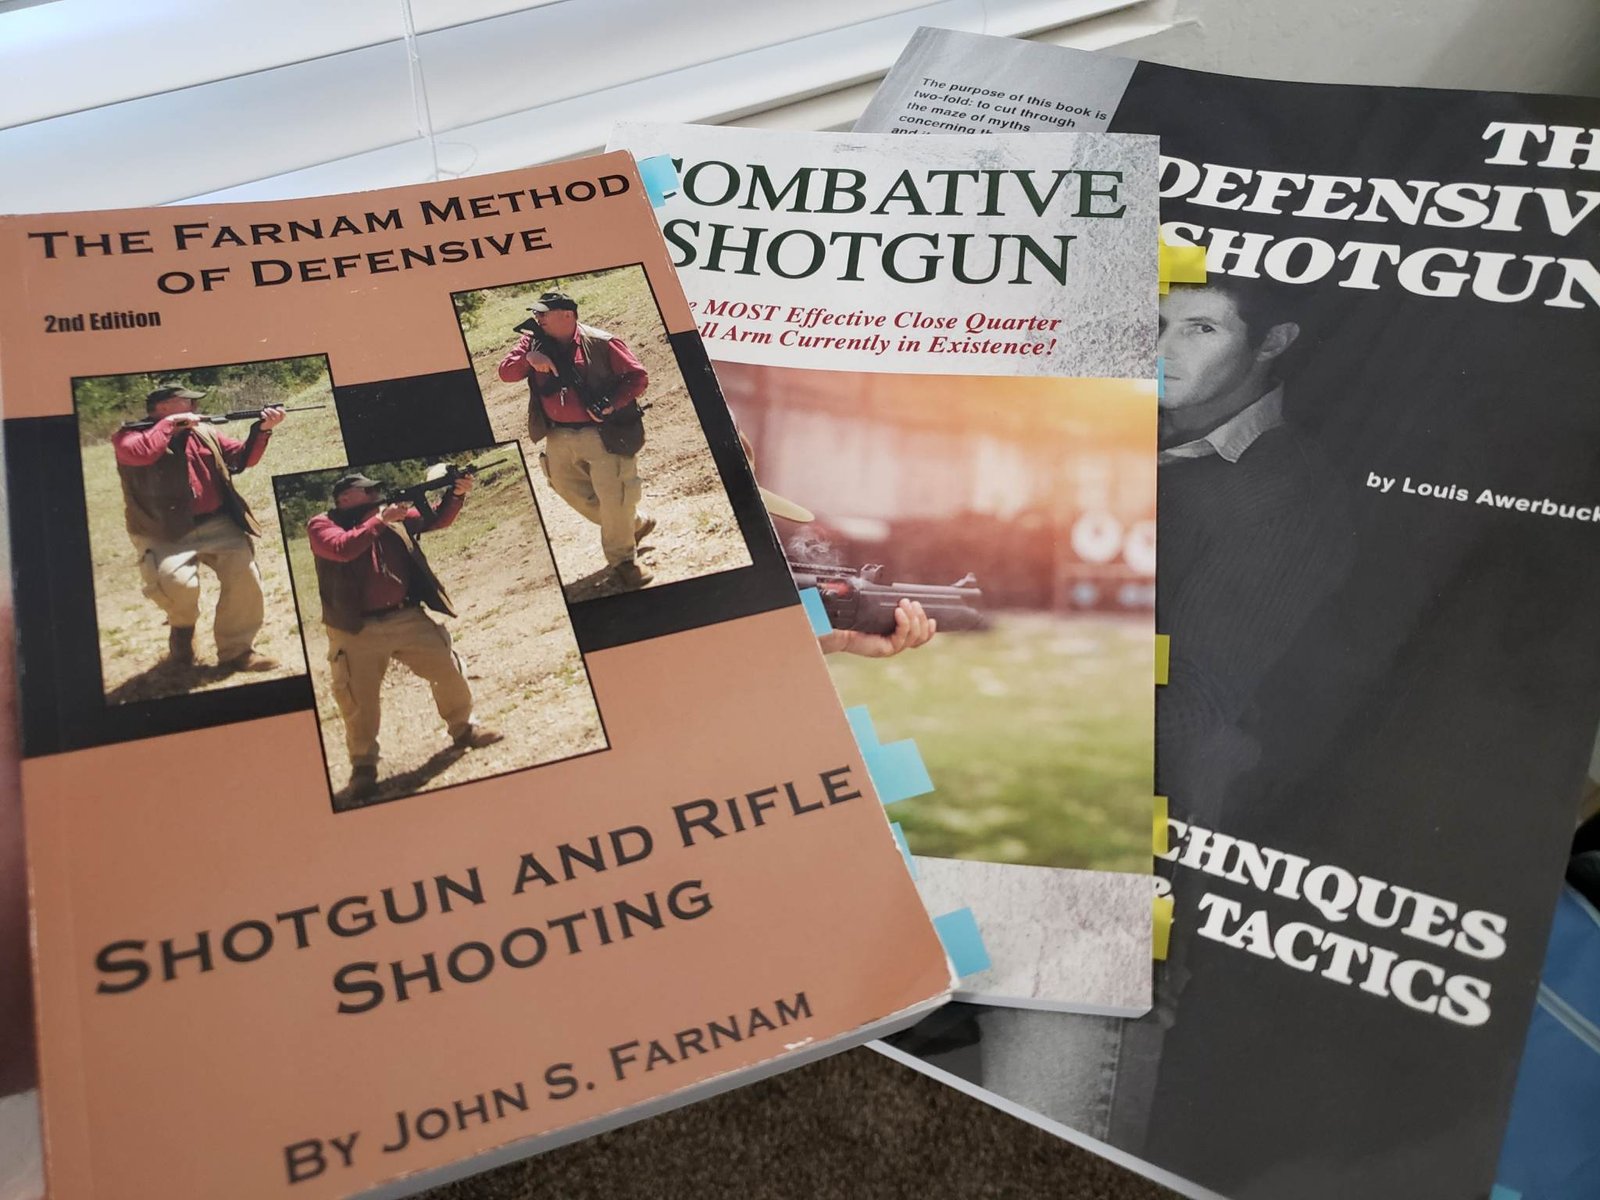 Defensive Shotgun Training and Resources